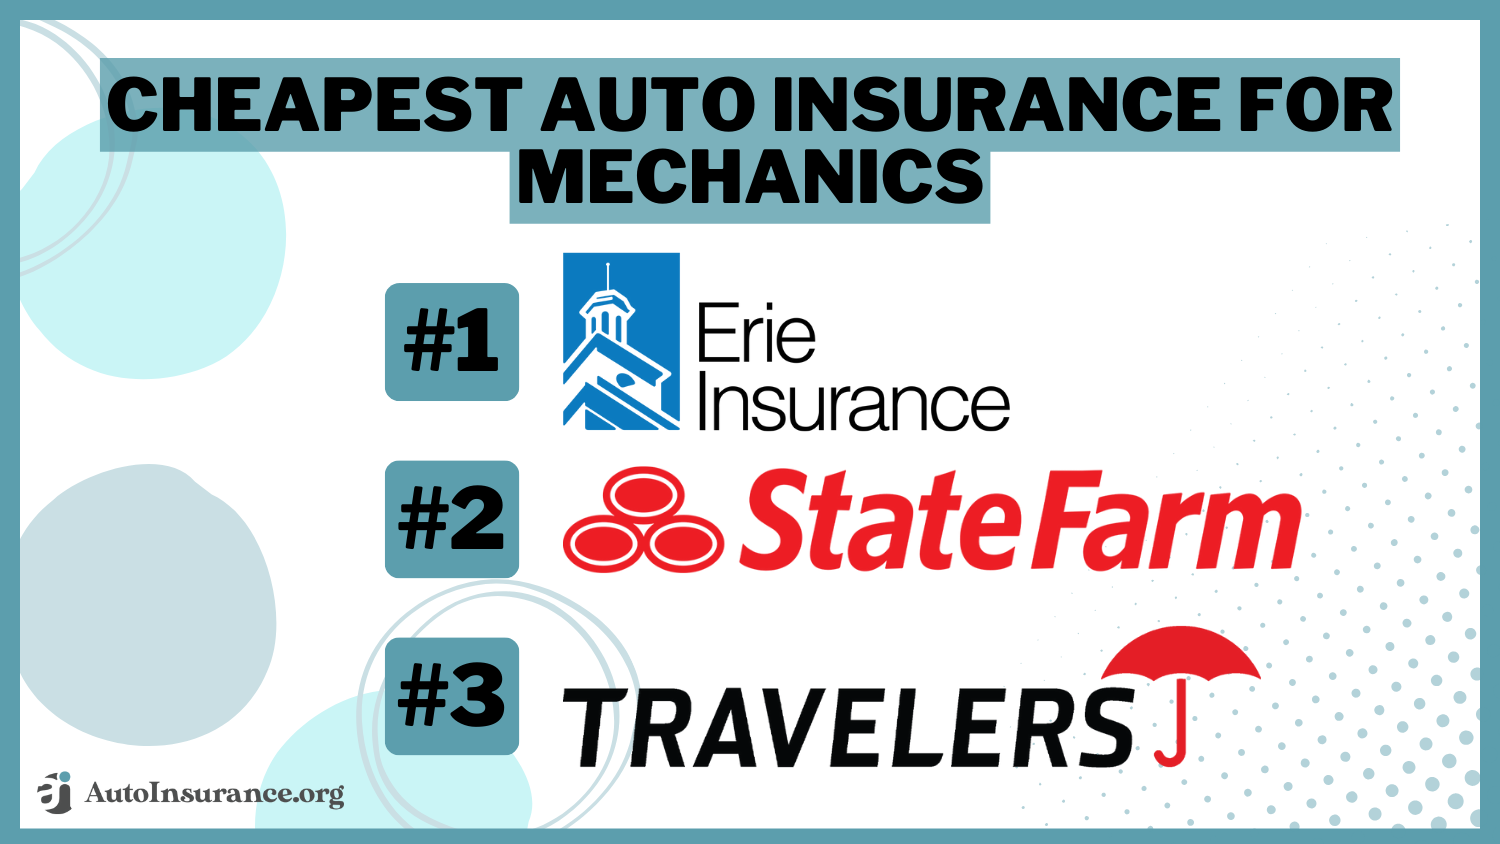 Cheapest Auto Insurance For Mechanics: Erie, State Farm, Travelers 